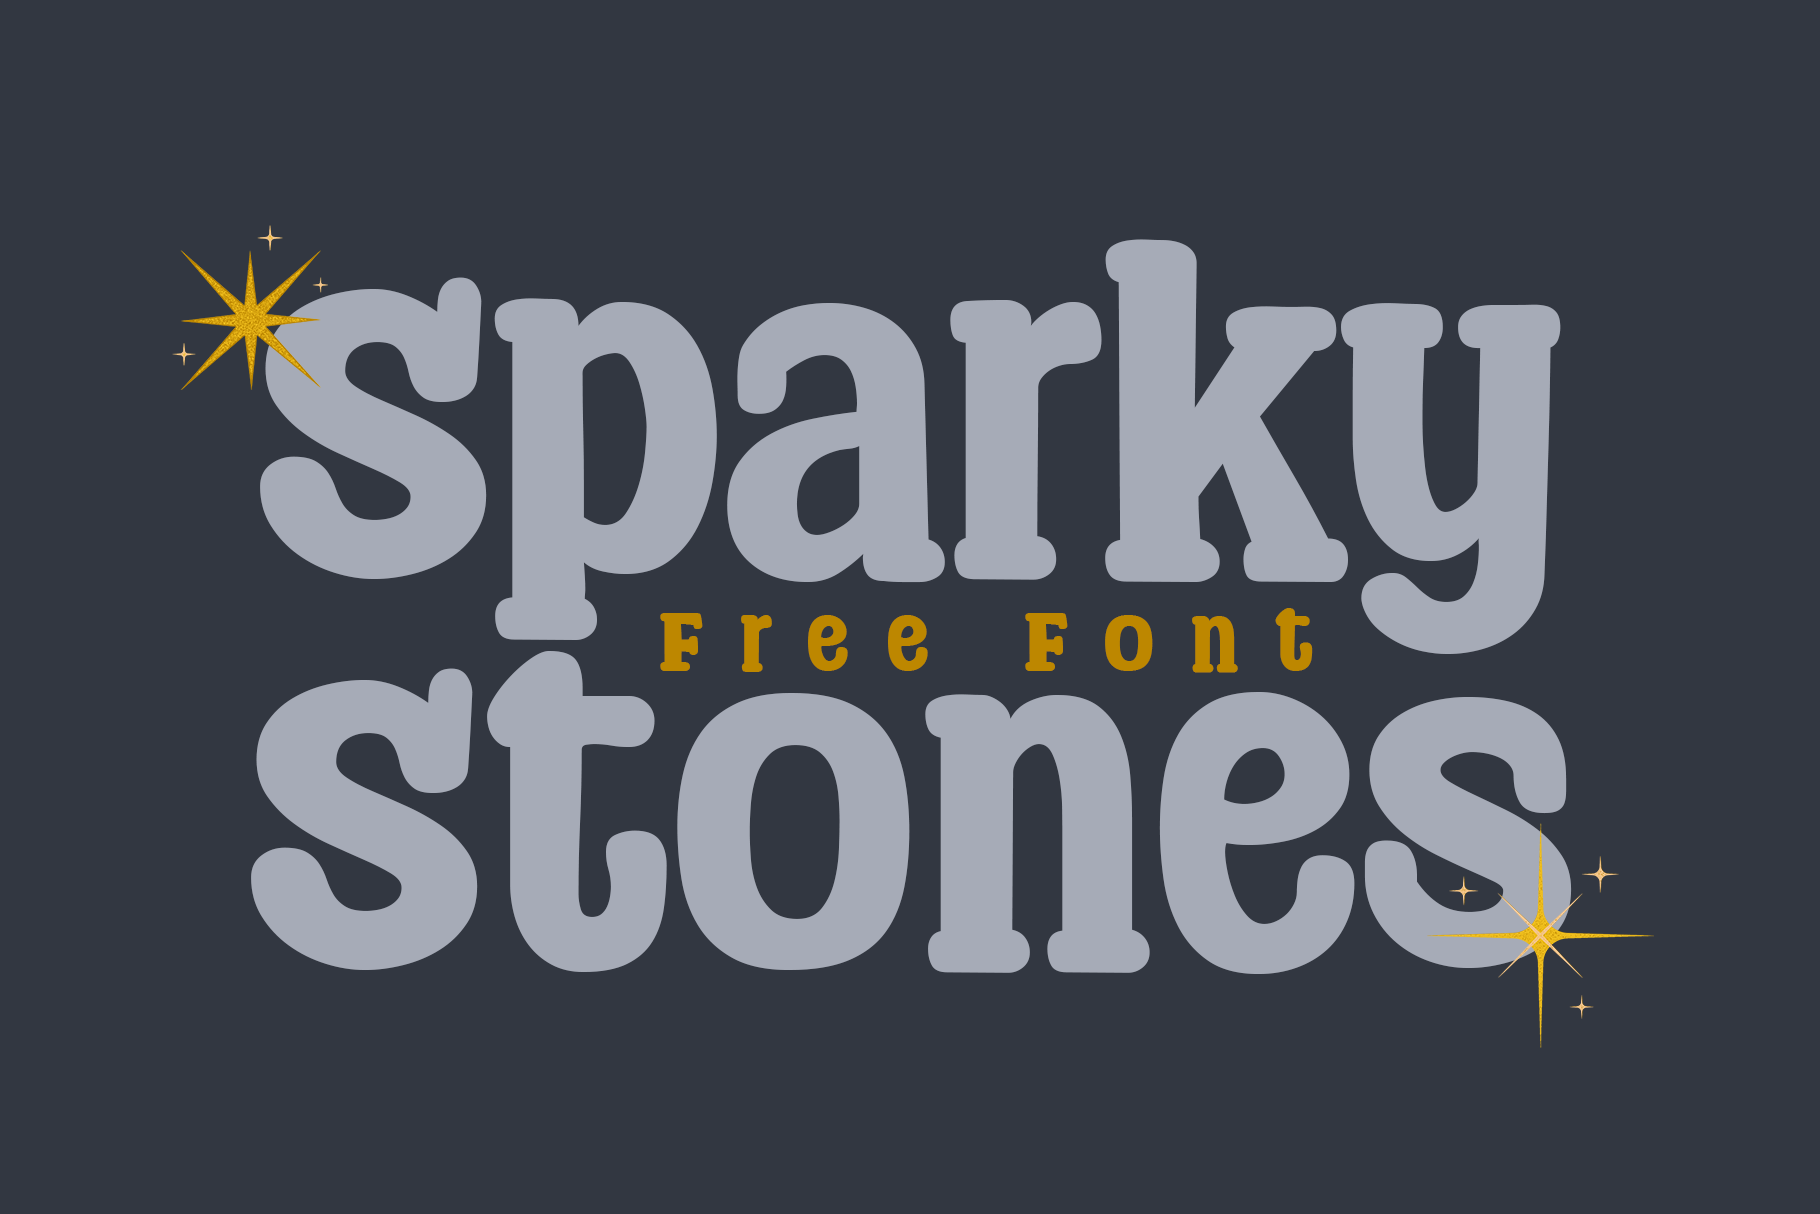 rock stone fonts